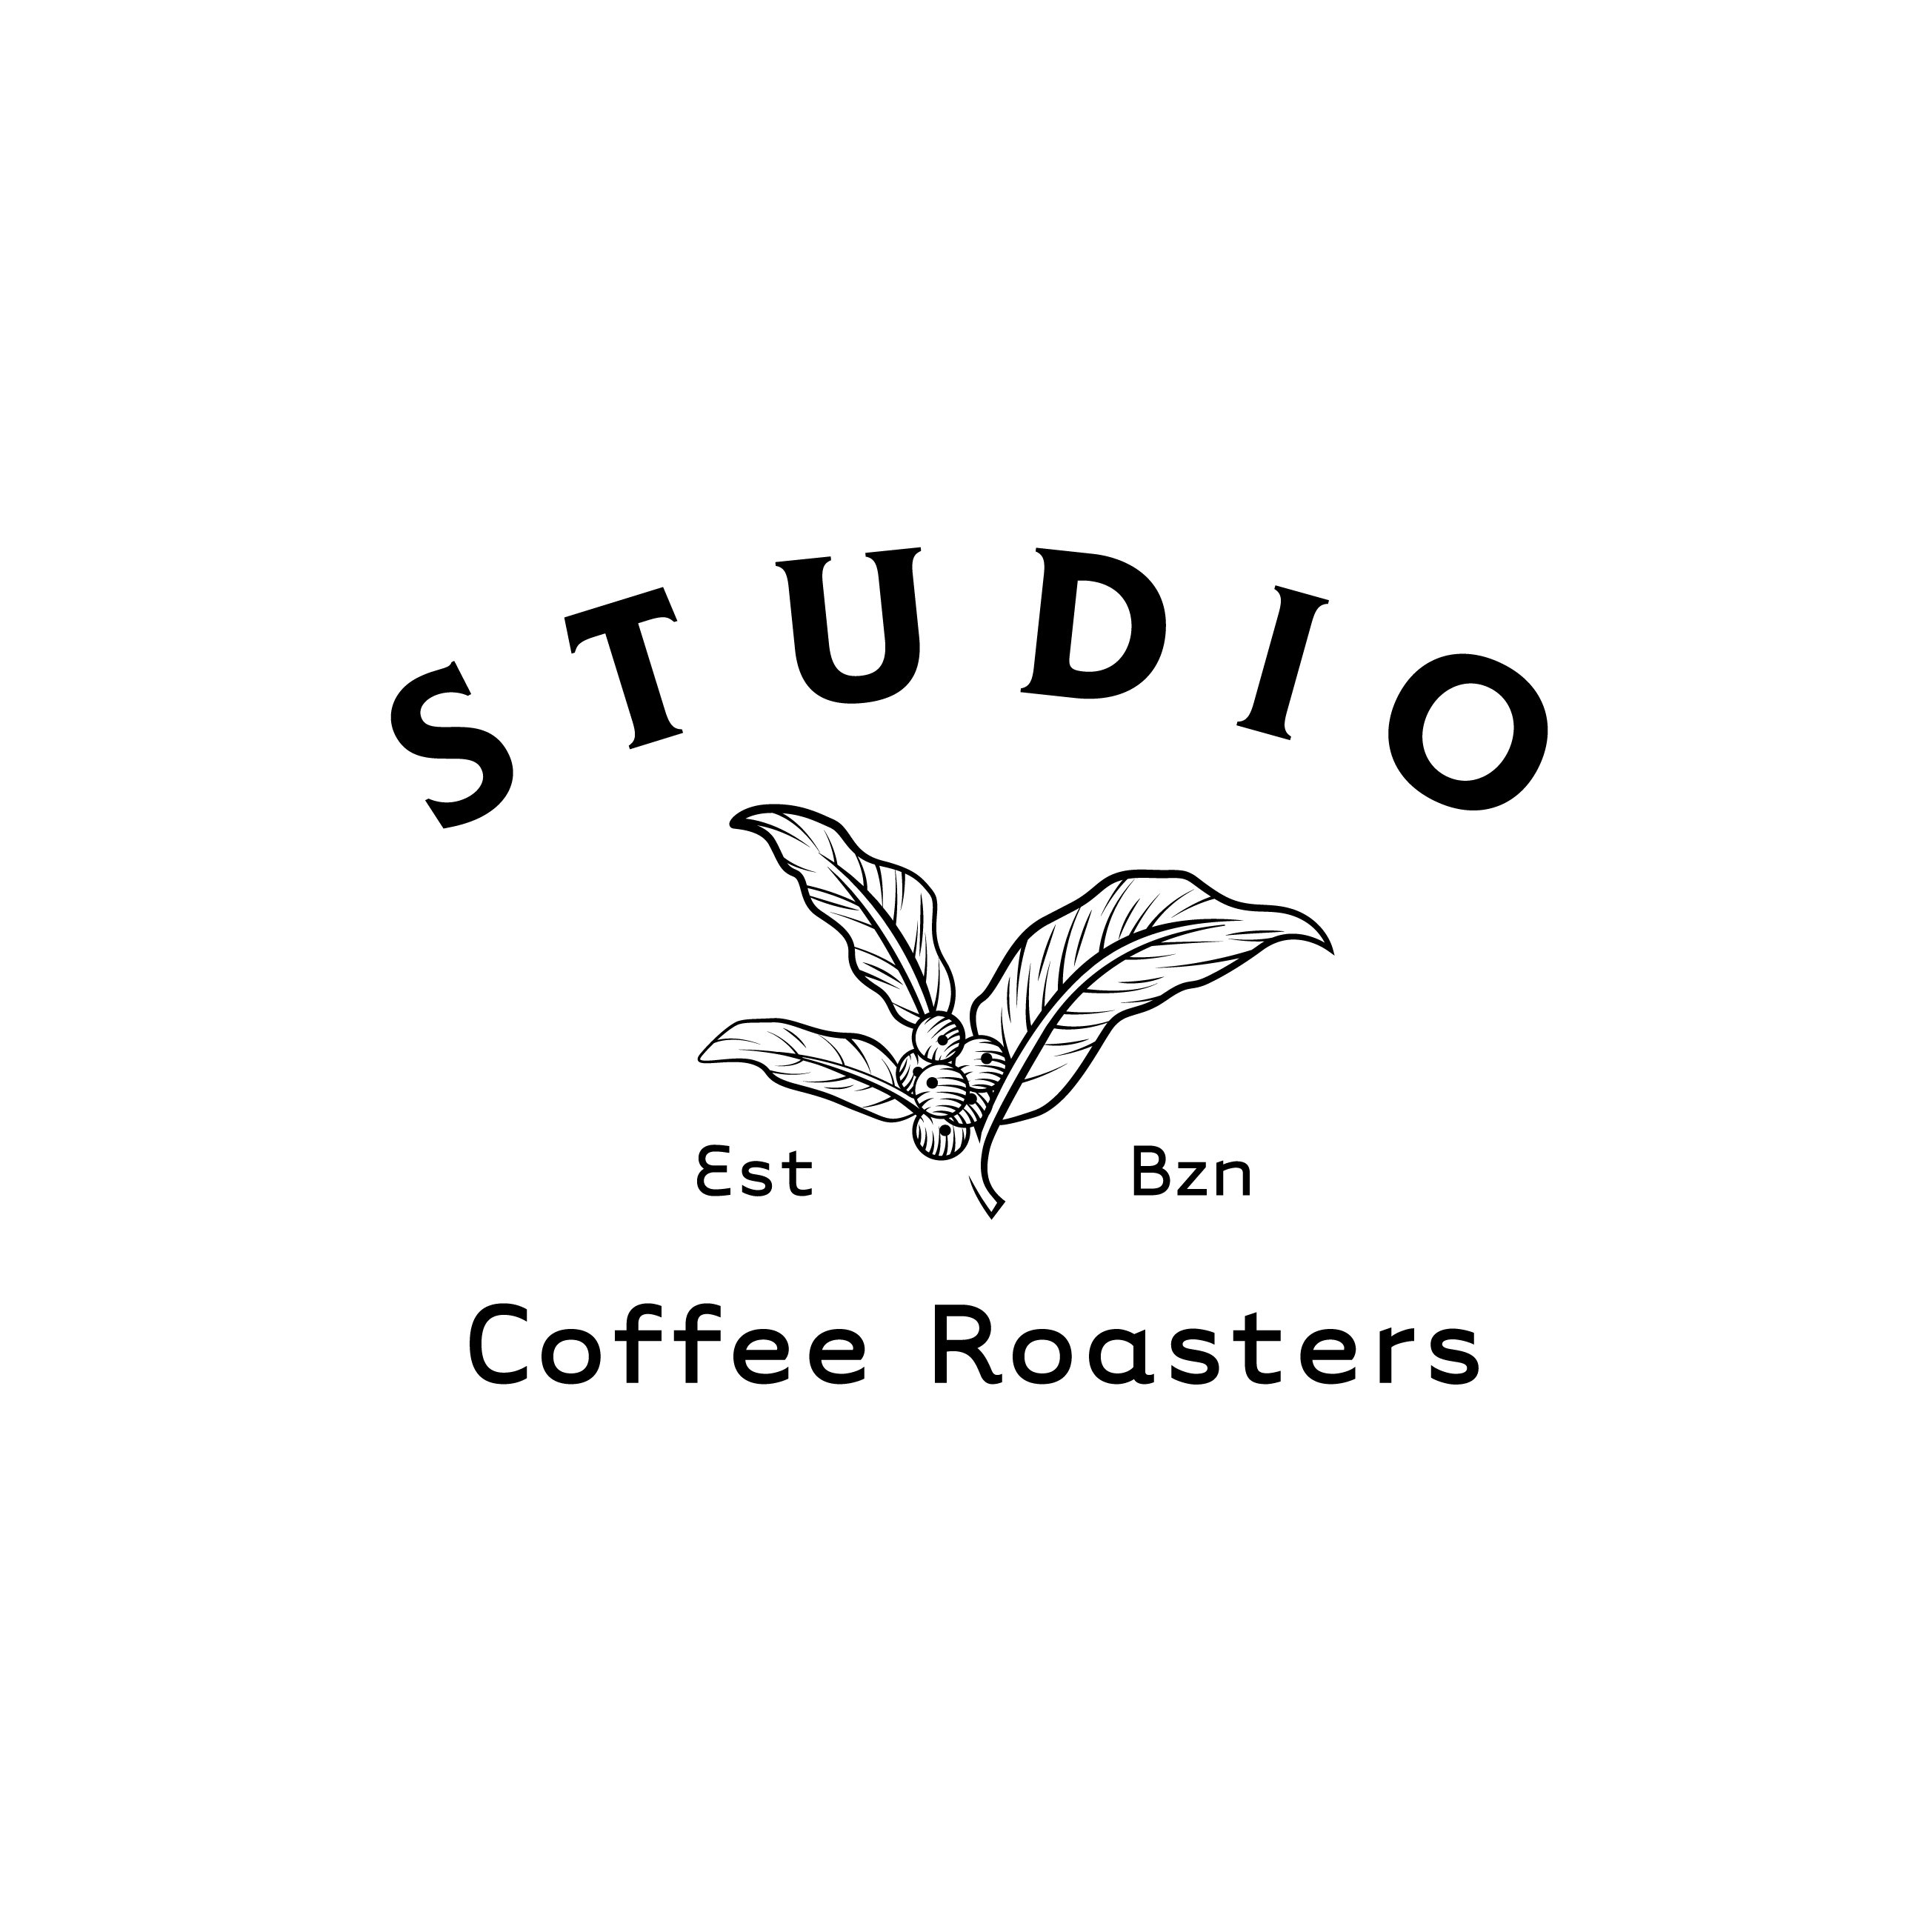 Next Happening: Introducing Studio Coffee Roasters!